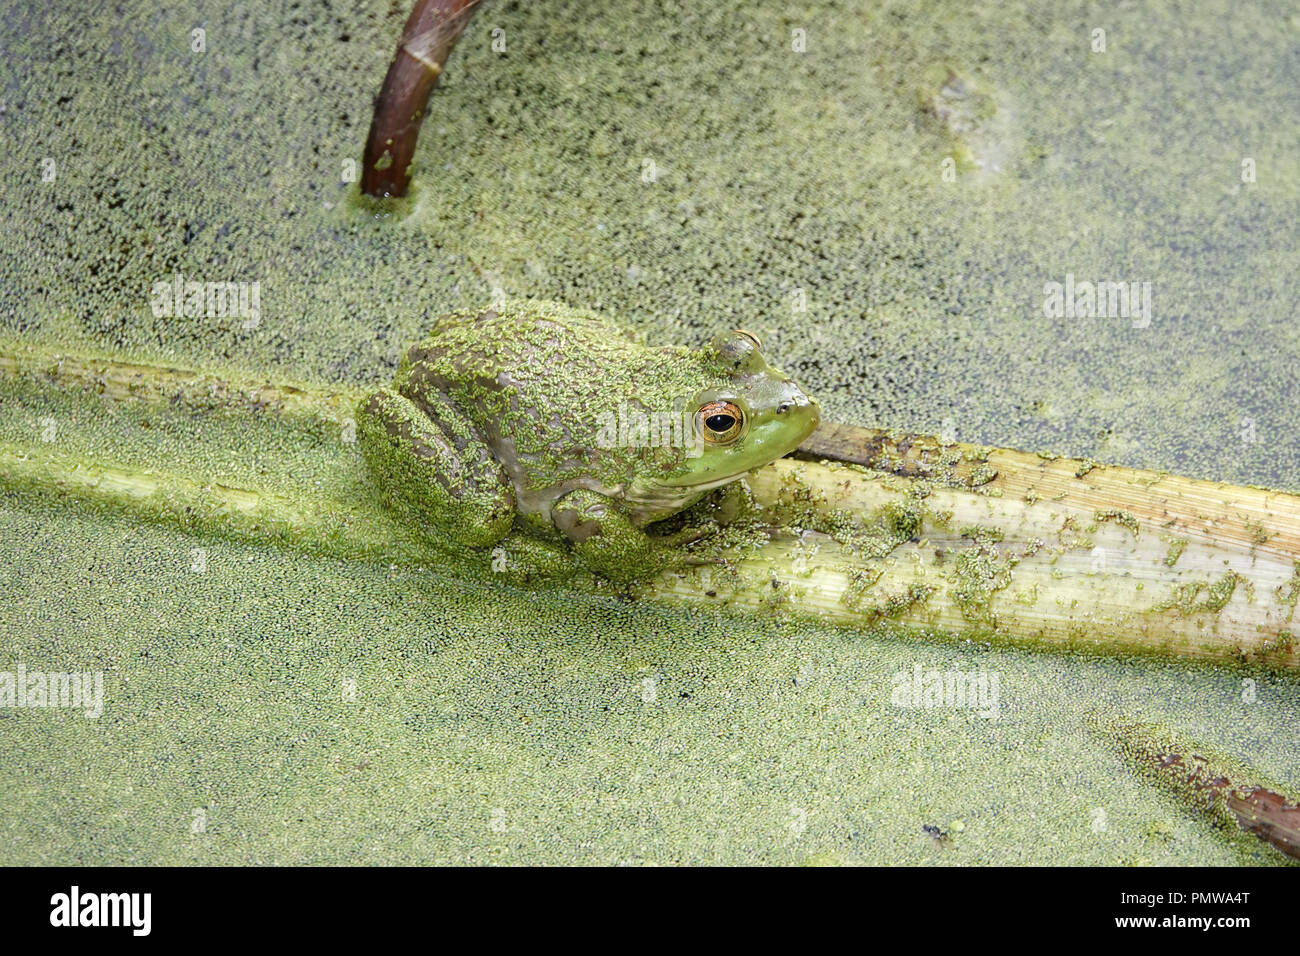 Wild American bullfrog (Lithobates catesbeianus or Rana catesbeiana) in a duckweed-covered pond Stock Photo